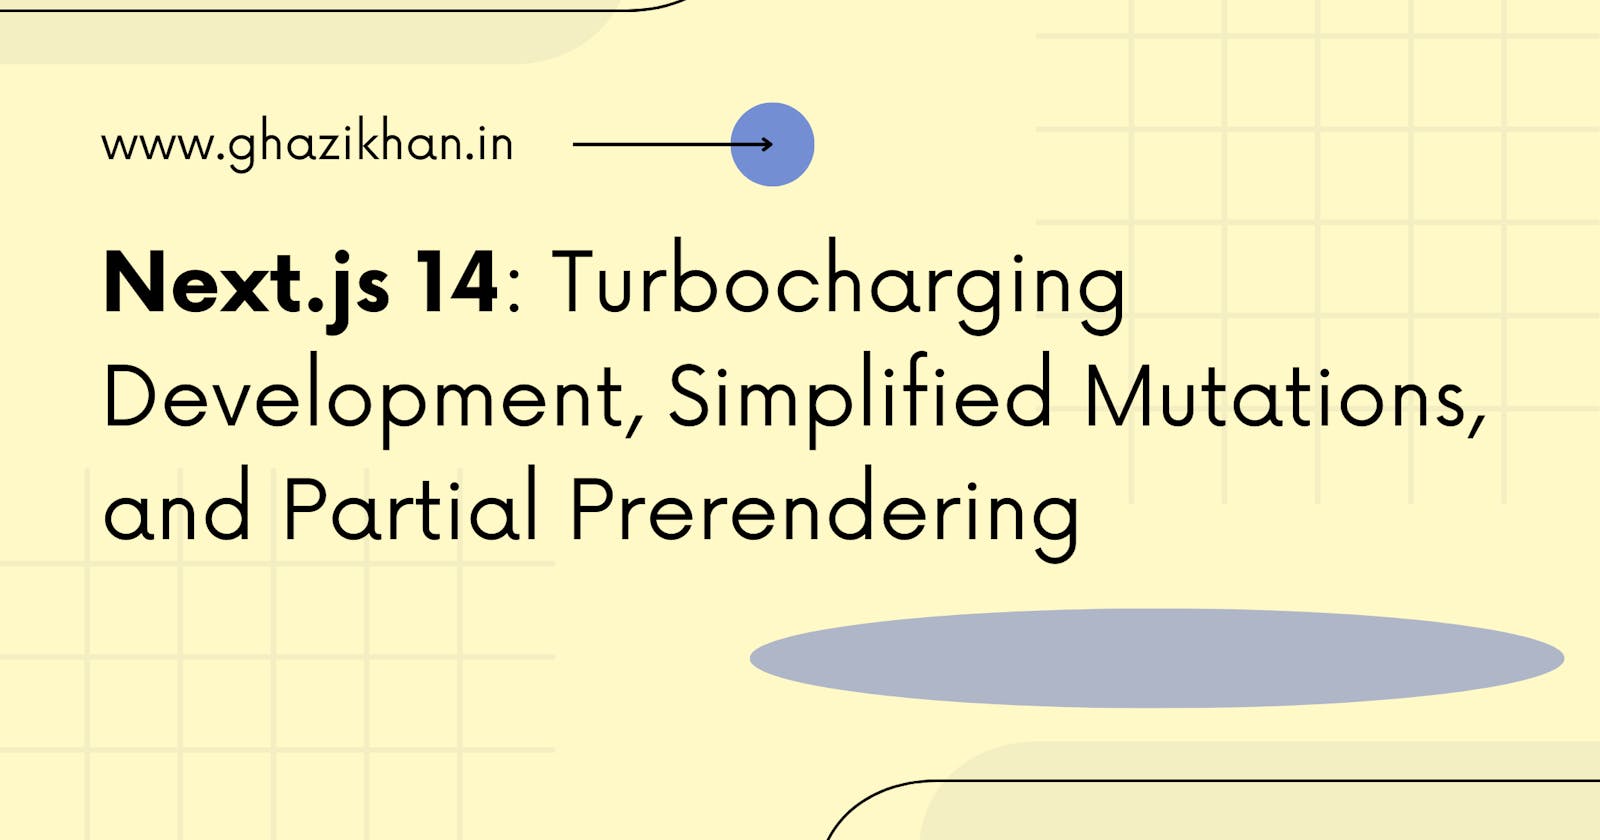 Next.js 14: Turbocharging Development, Simplified Mutations, and Partial Prerendering